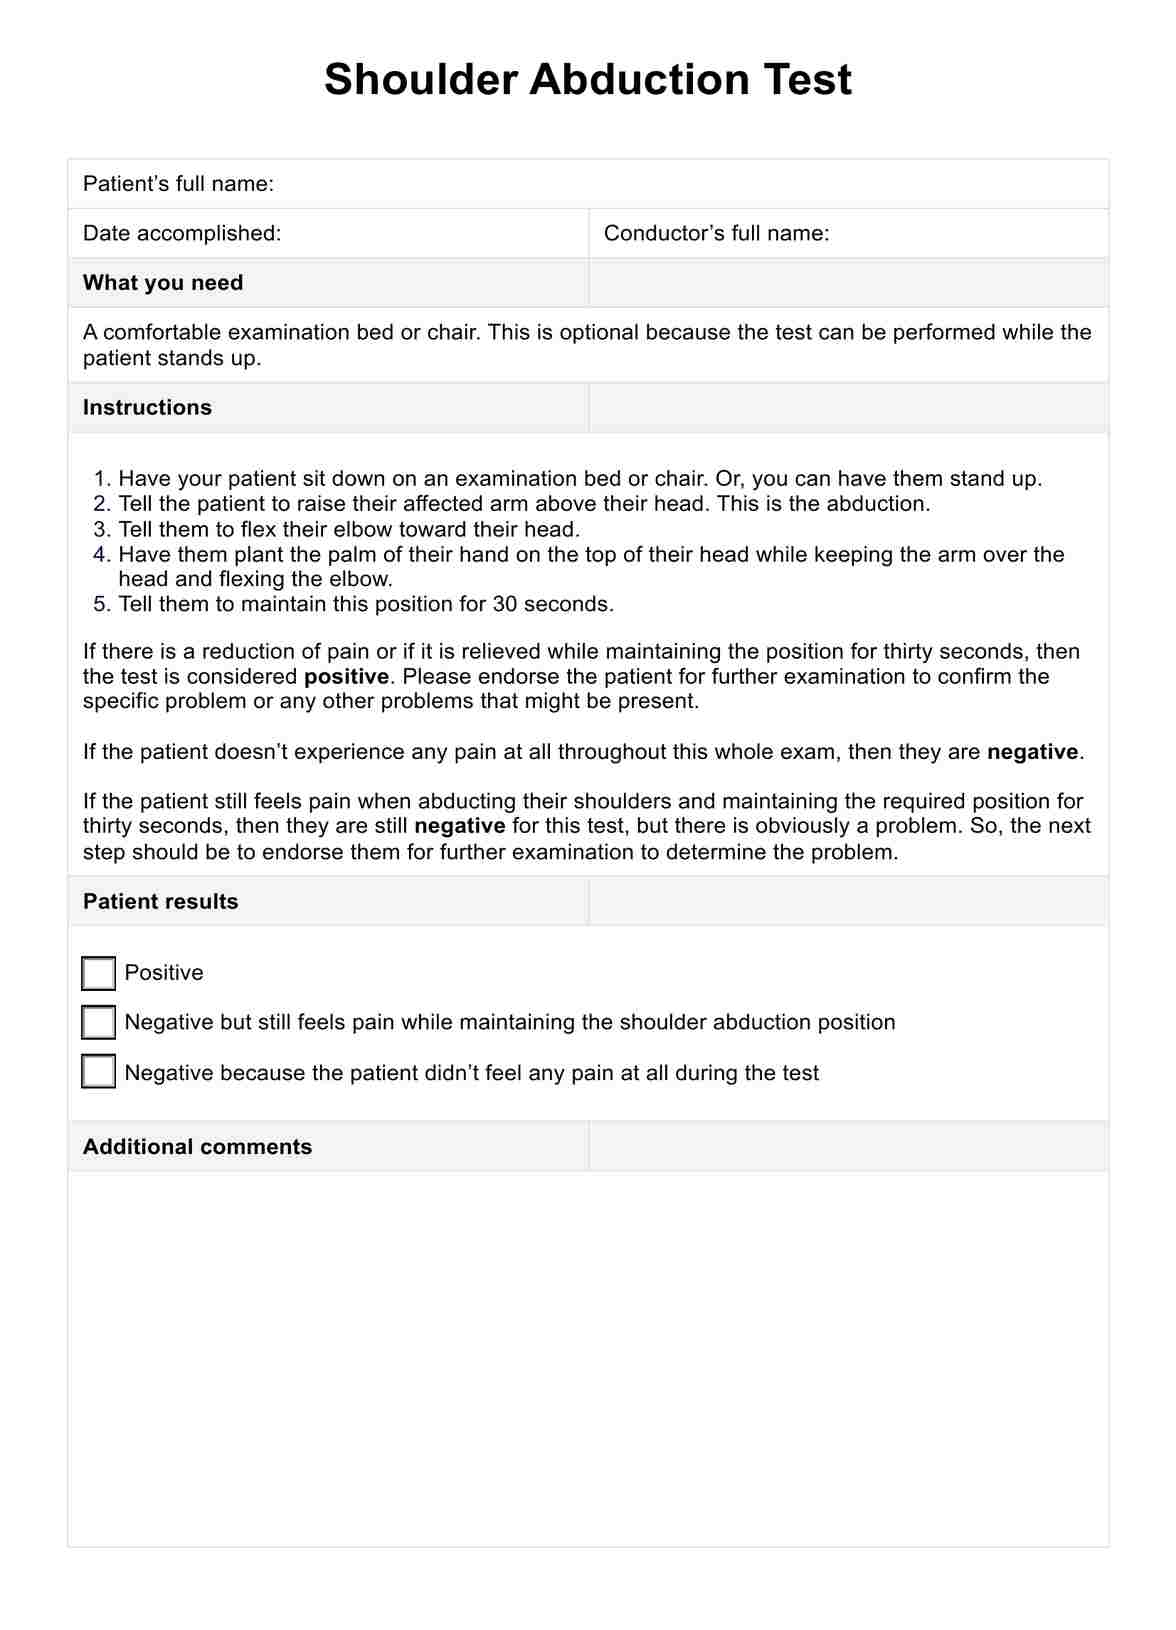 Shoulder Abduction Test PDF Example